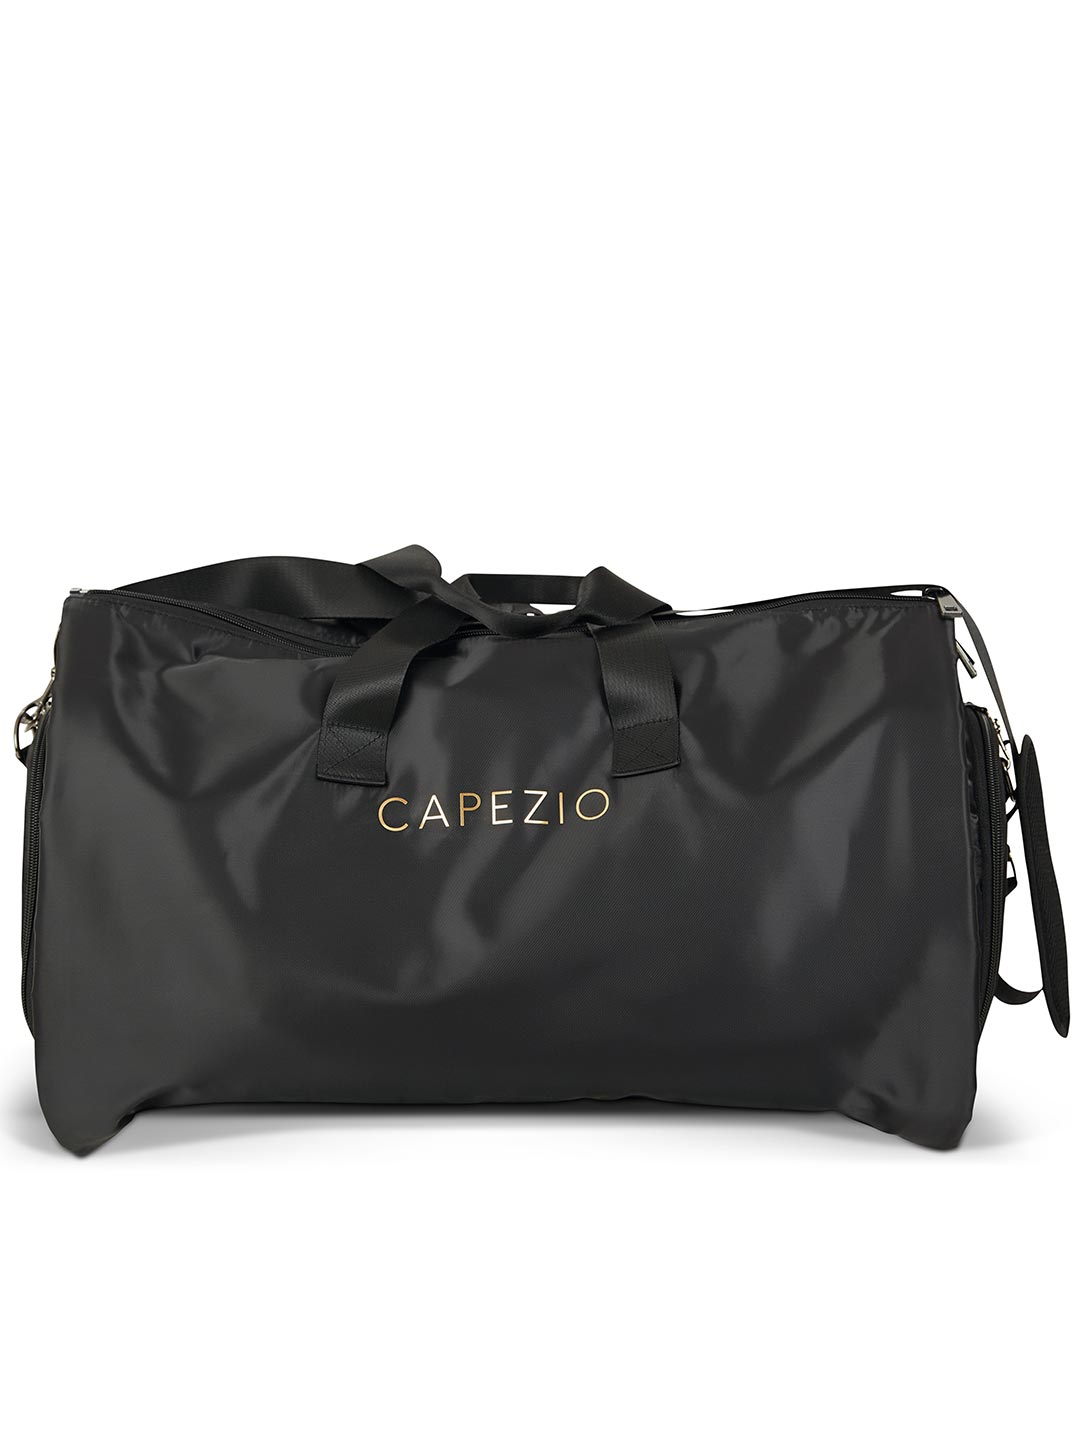 https://www.capezio.com/media/catalog/product/c/a/capezio_dance_garment_duffle_black_b253_f.jpg